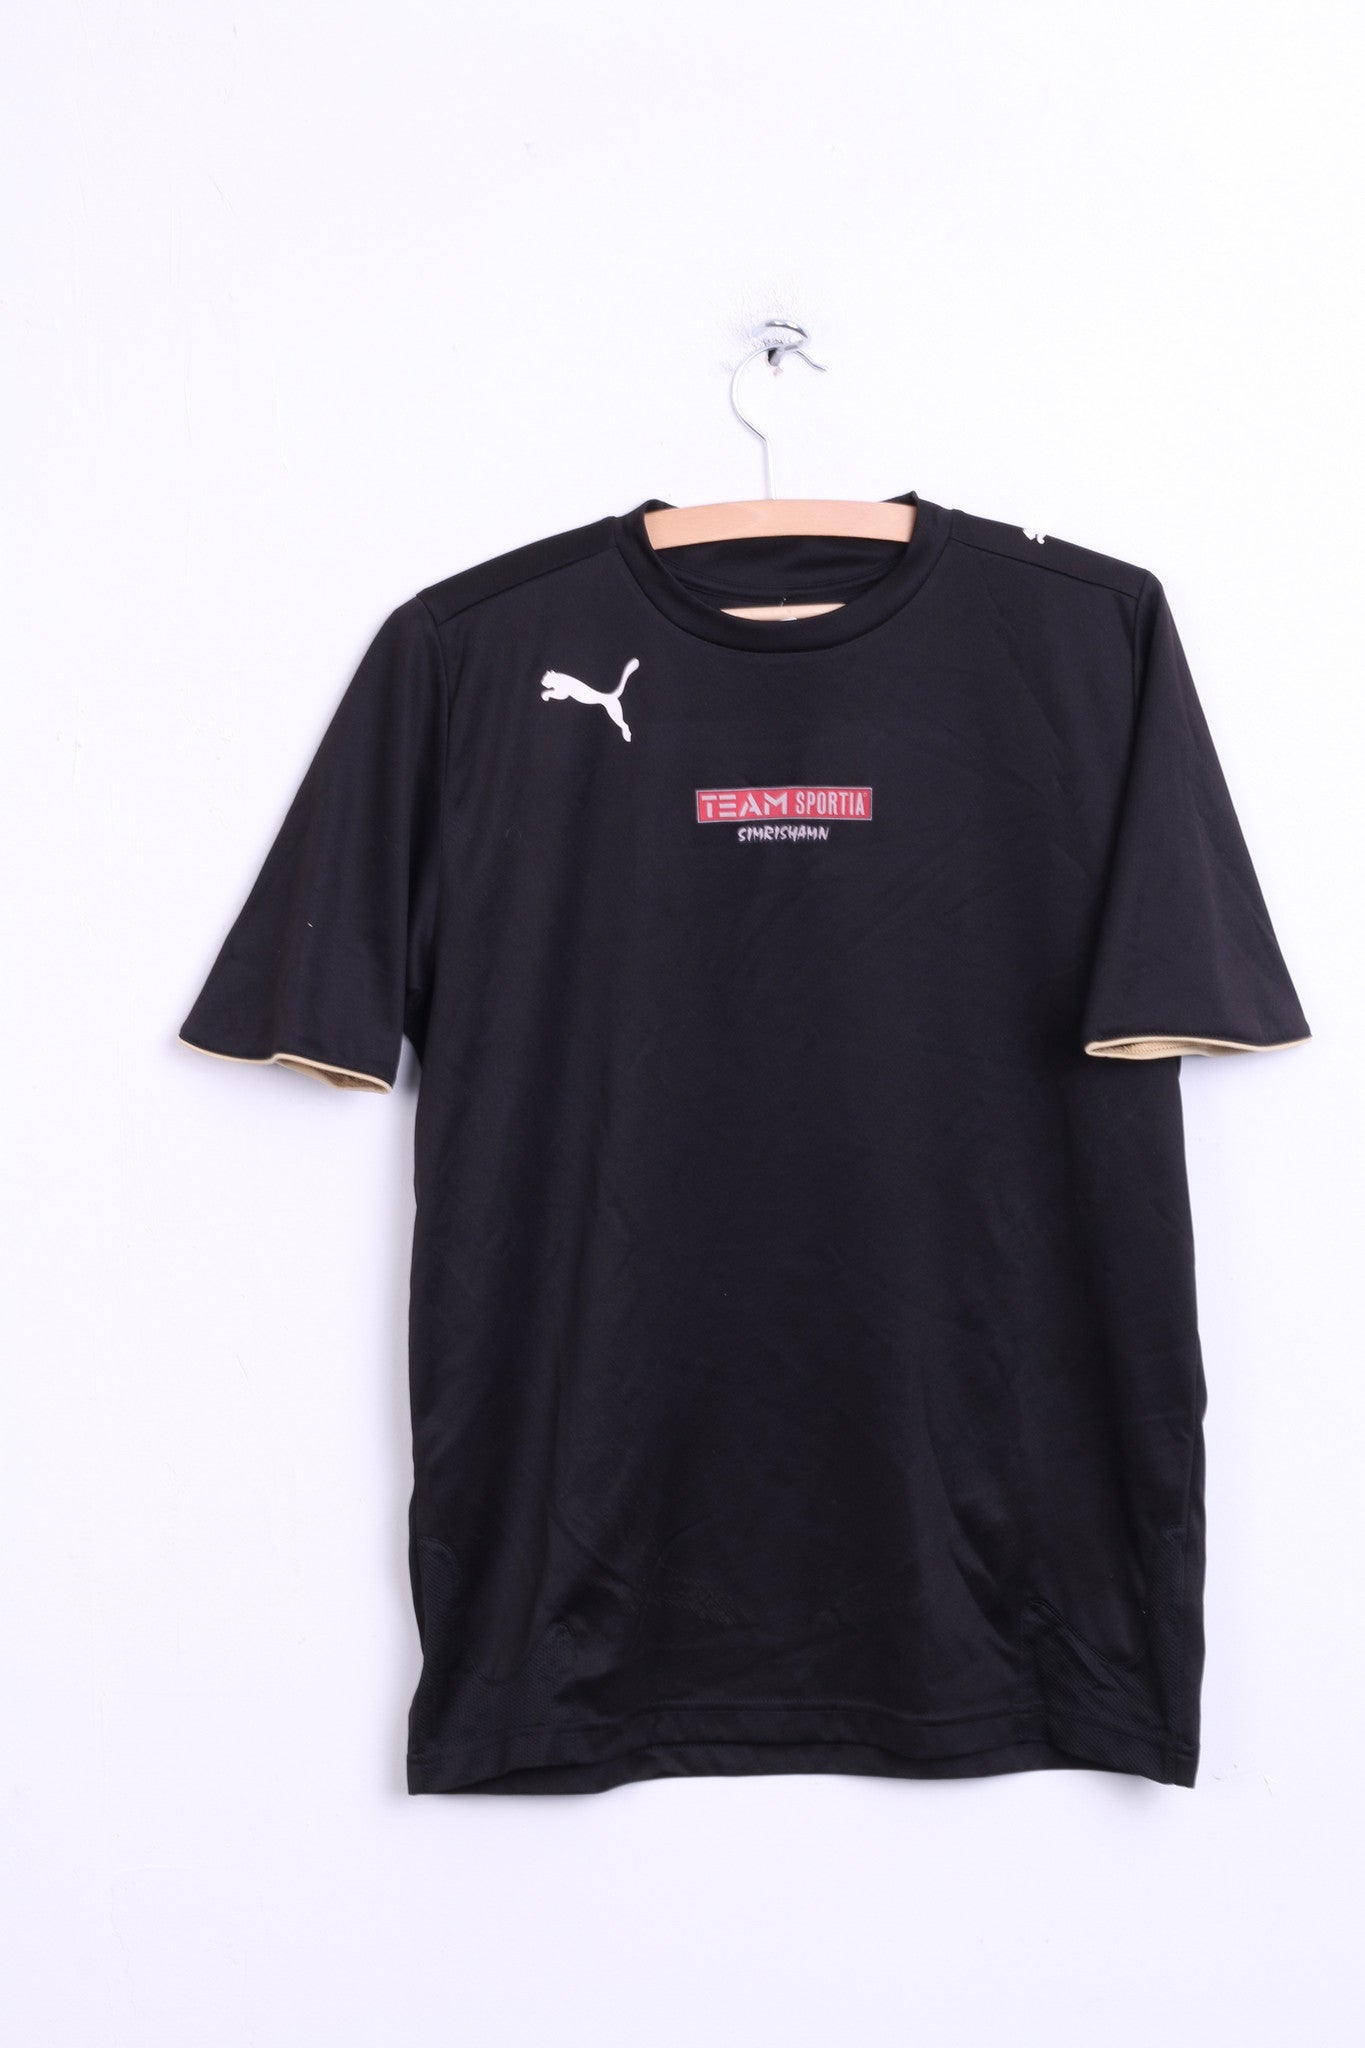 Puma Mens M Shirt Black Team Sportia SIMRISHAMN Football Club - RetrospectClothes